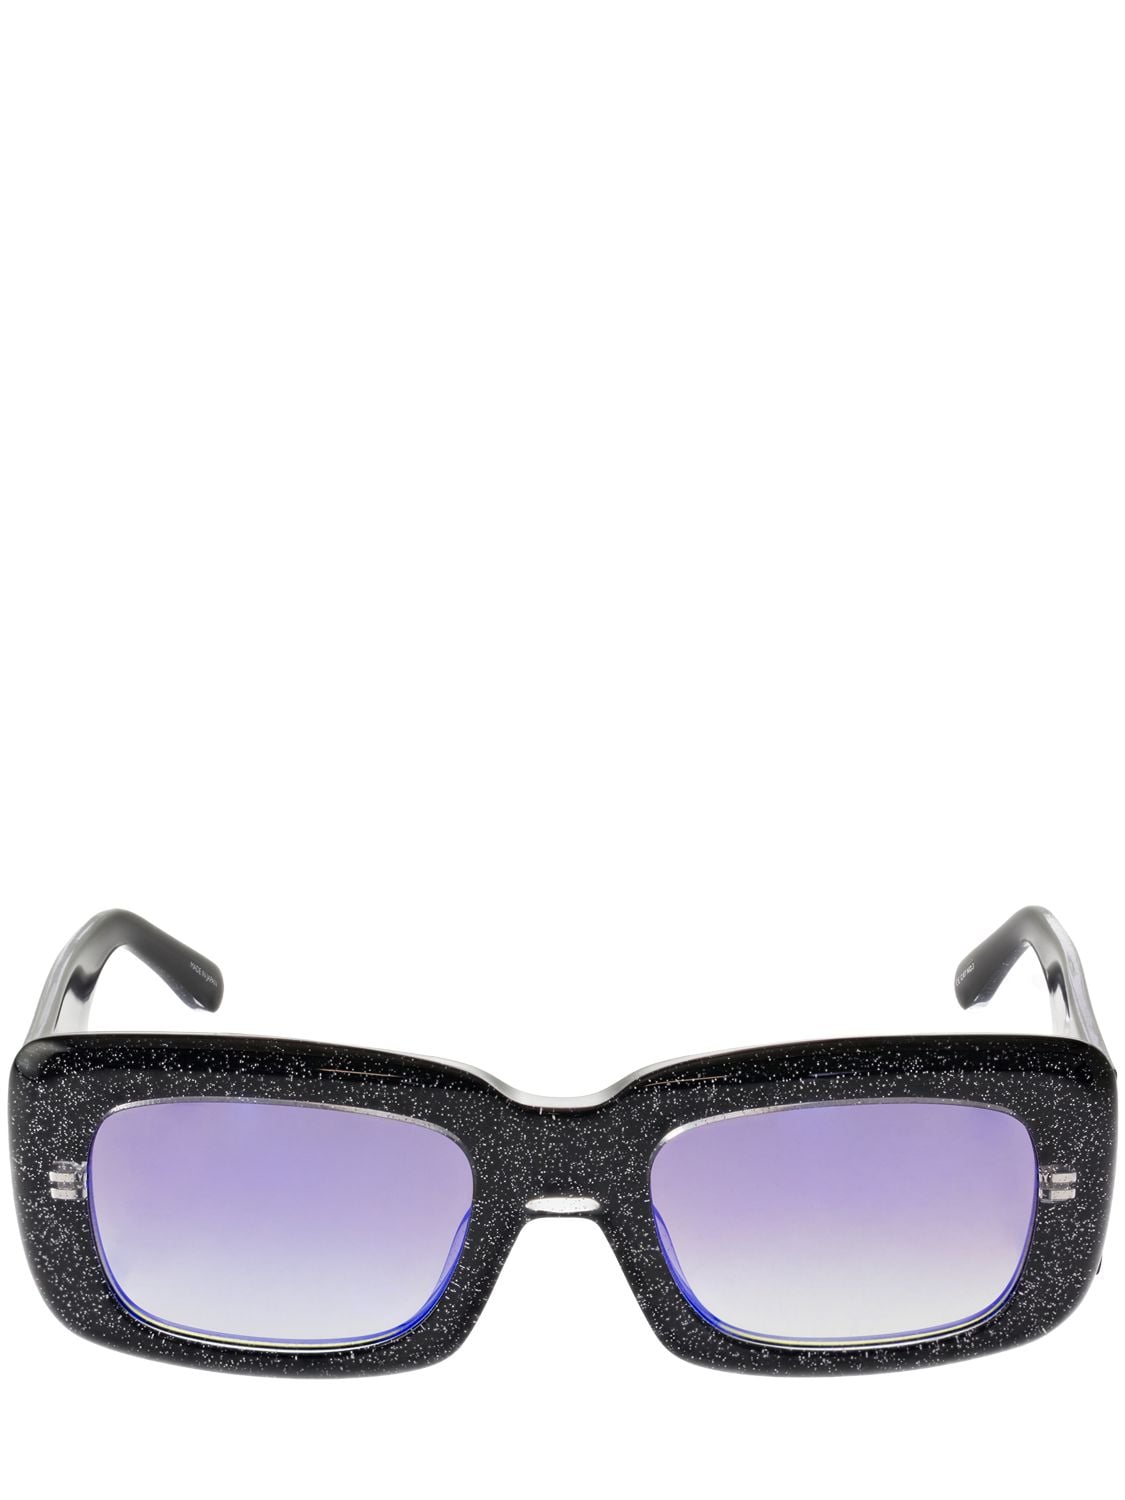 THE ATTICO Marfa Squared Acetate Sunglasses